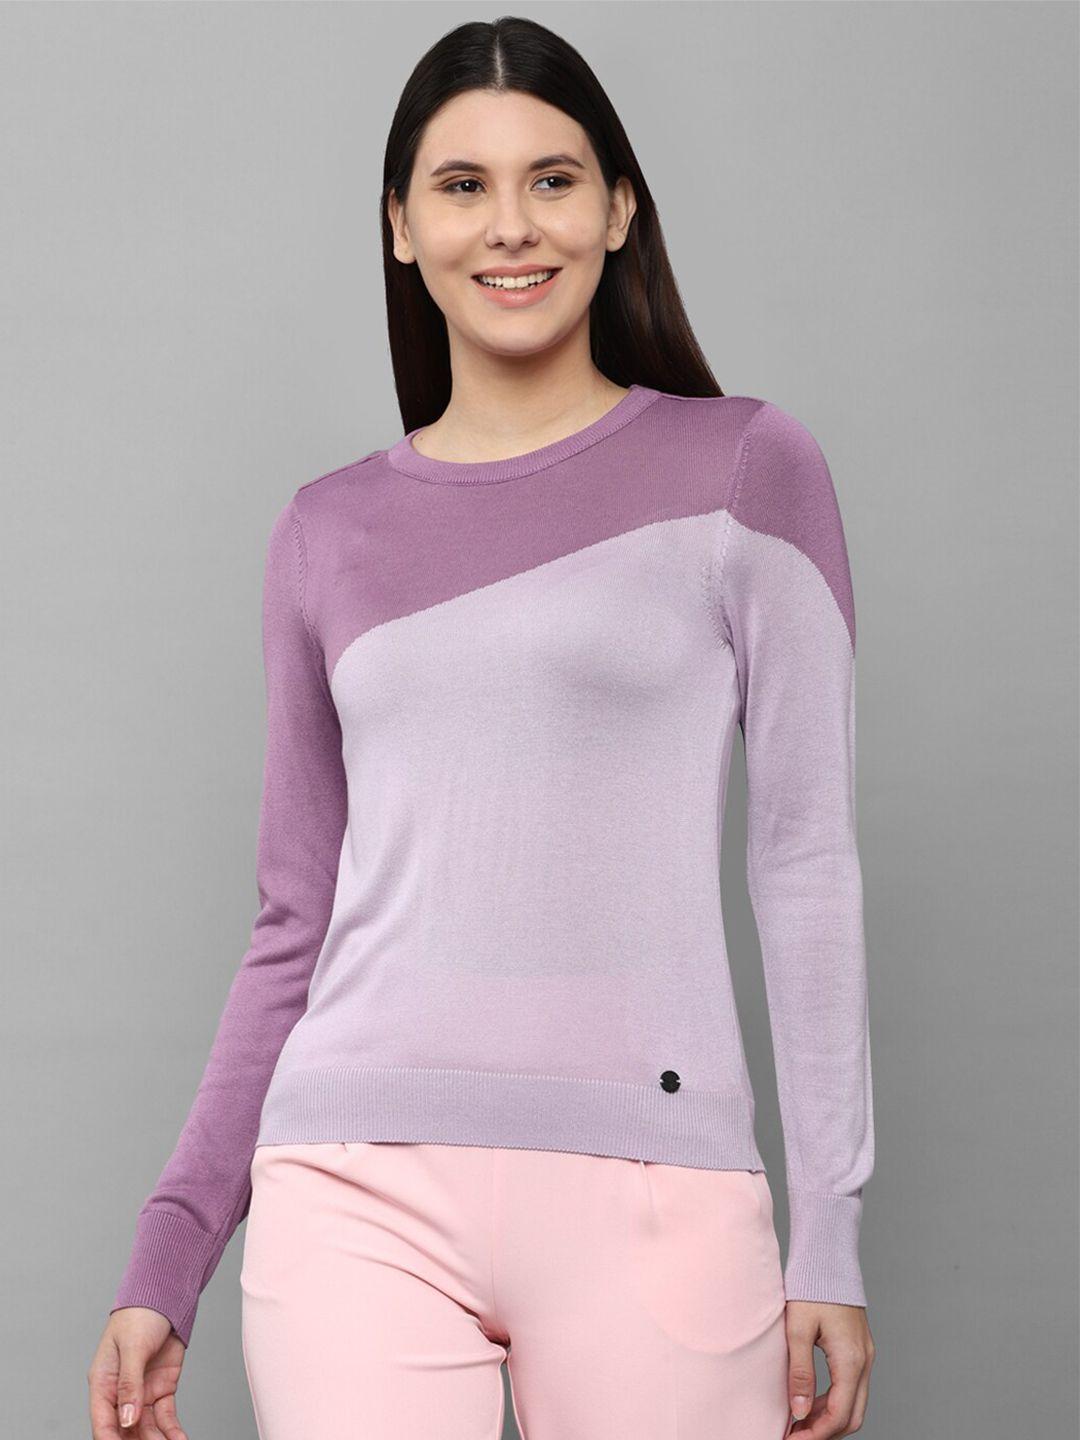 allen solly woman purple colourblocked top